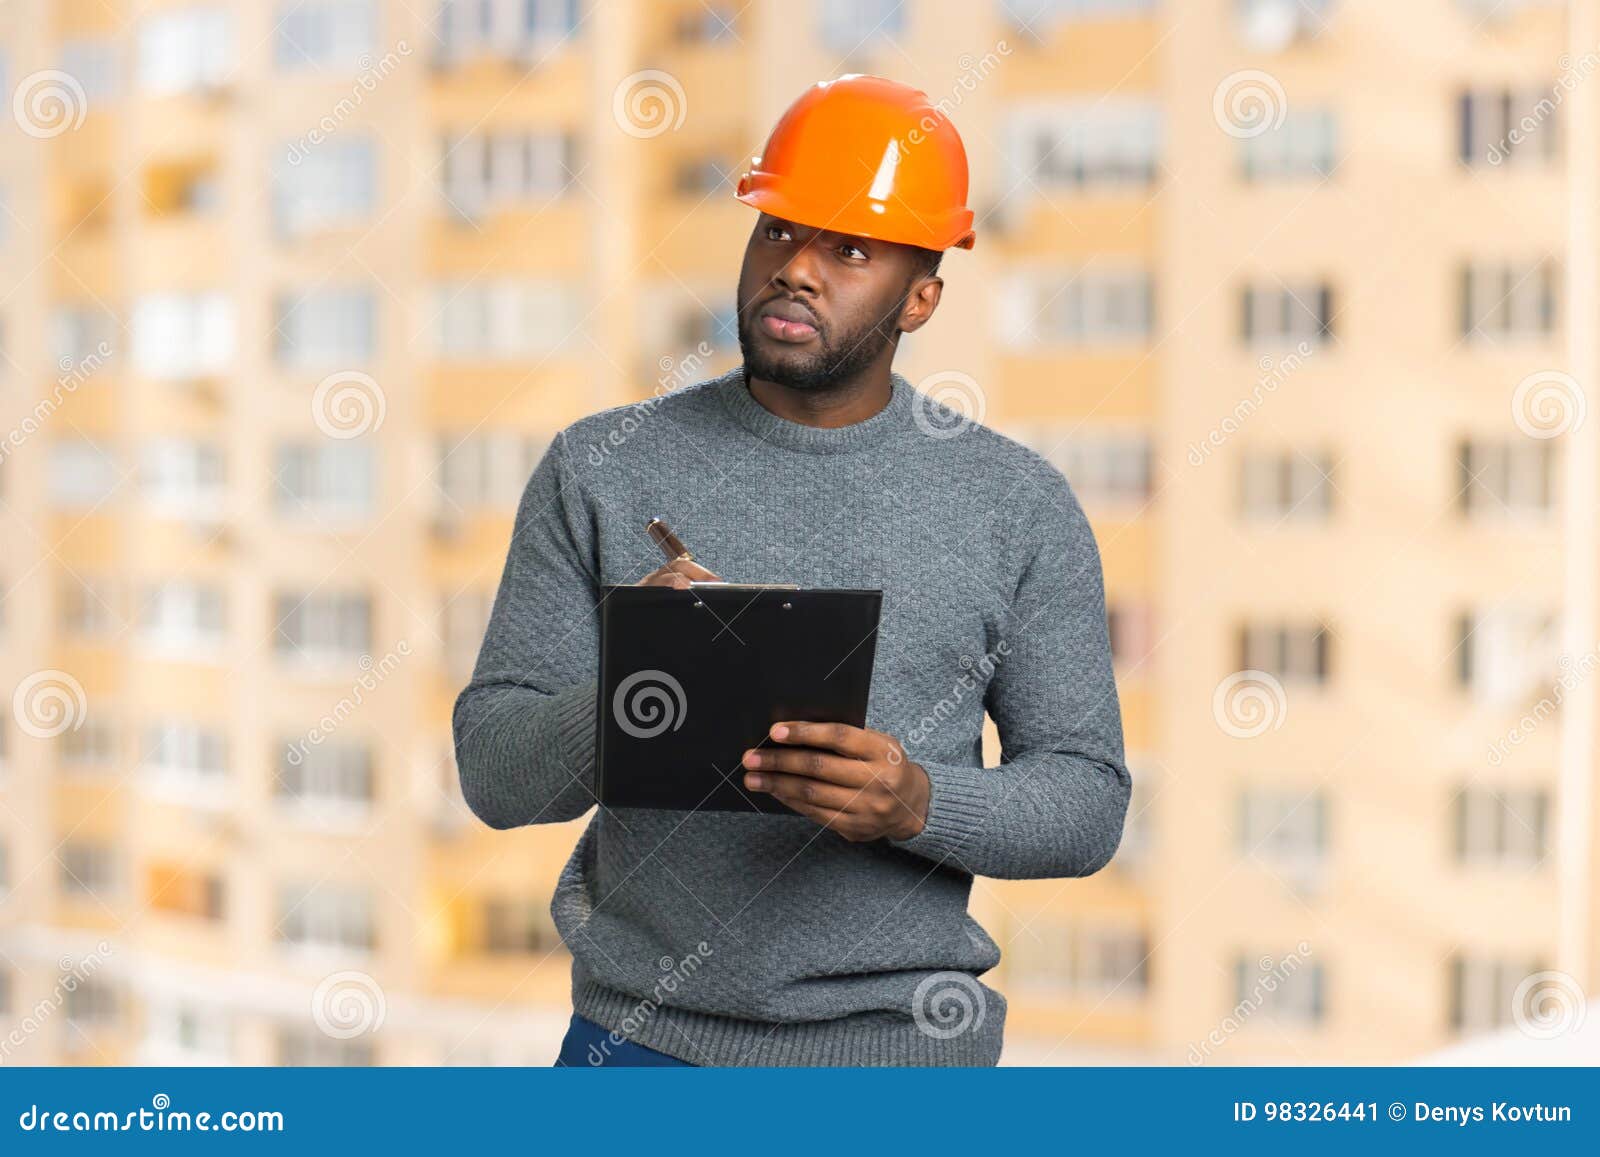 construction supervisor writes on clipboard.